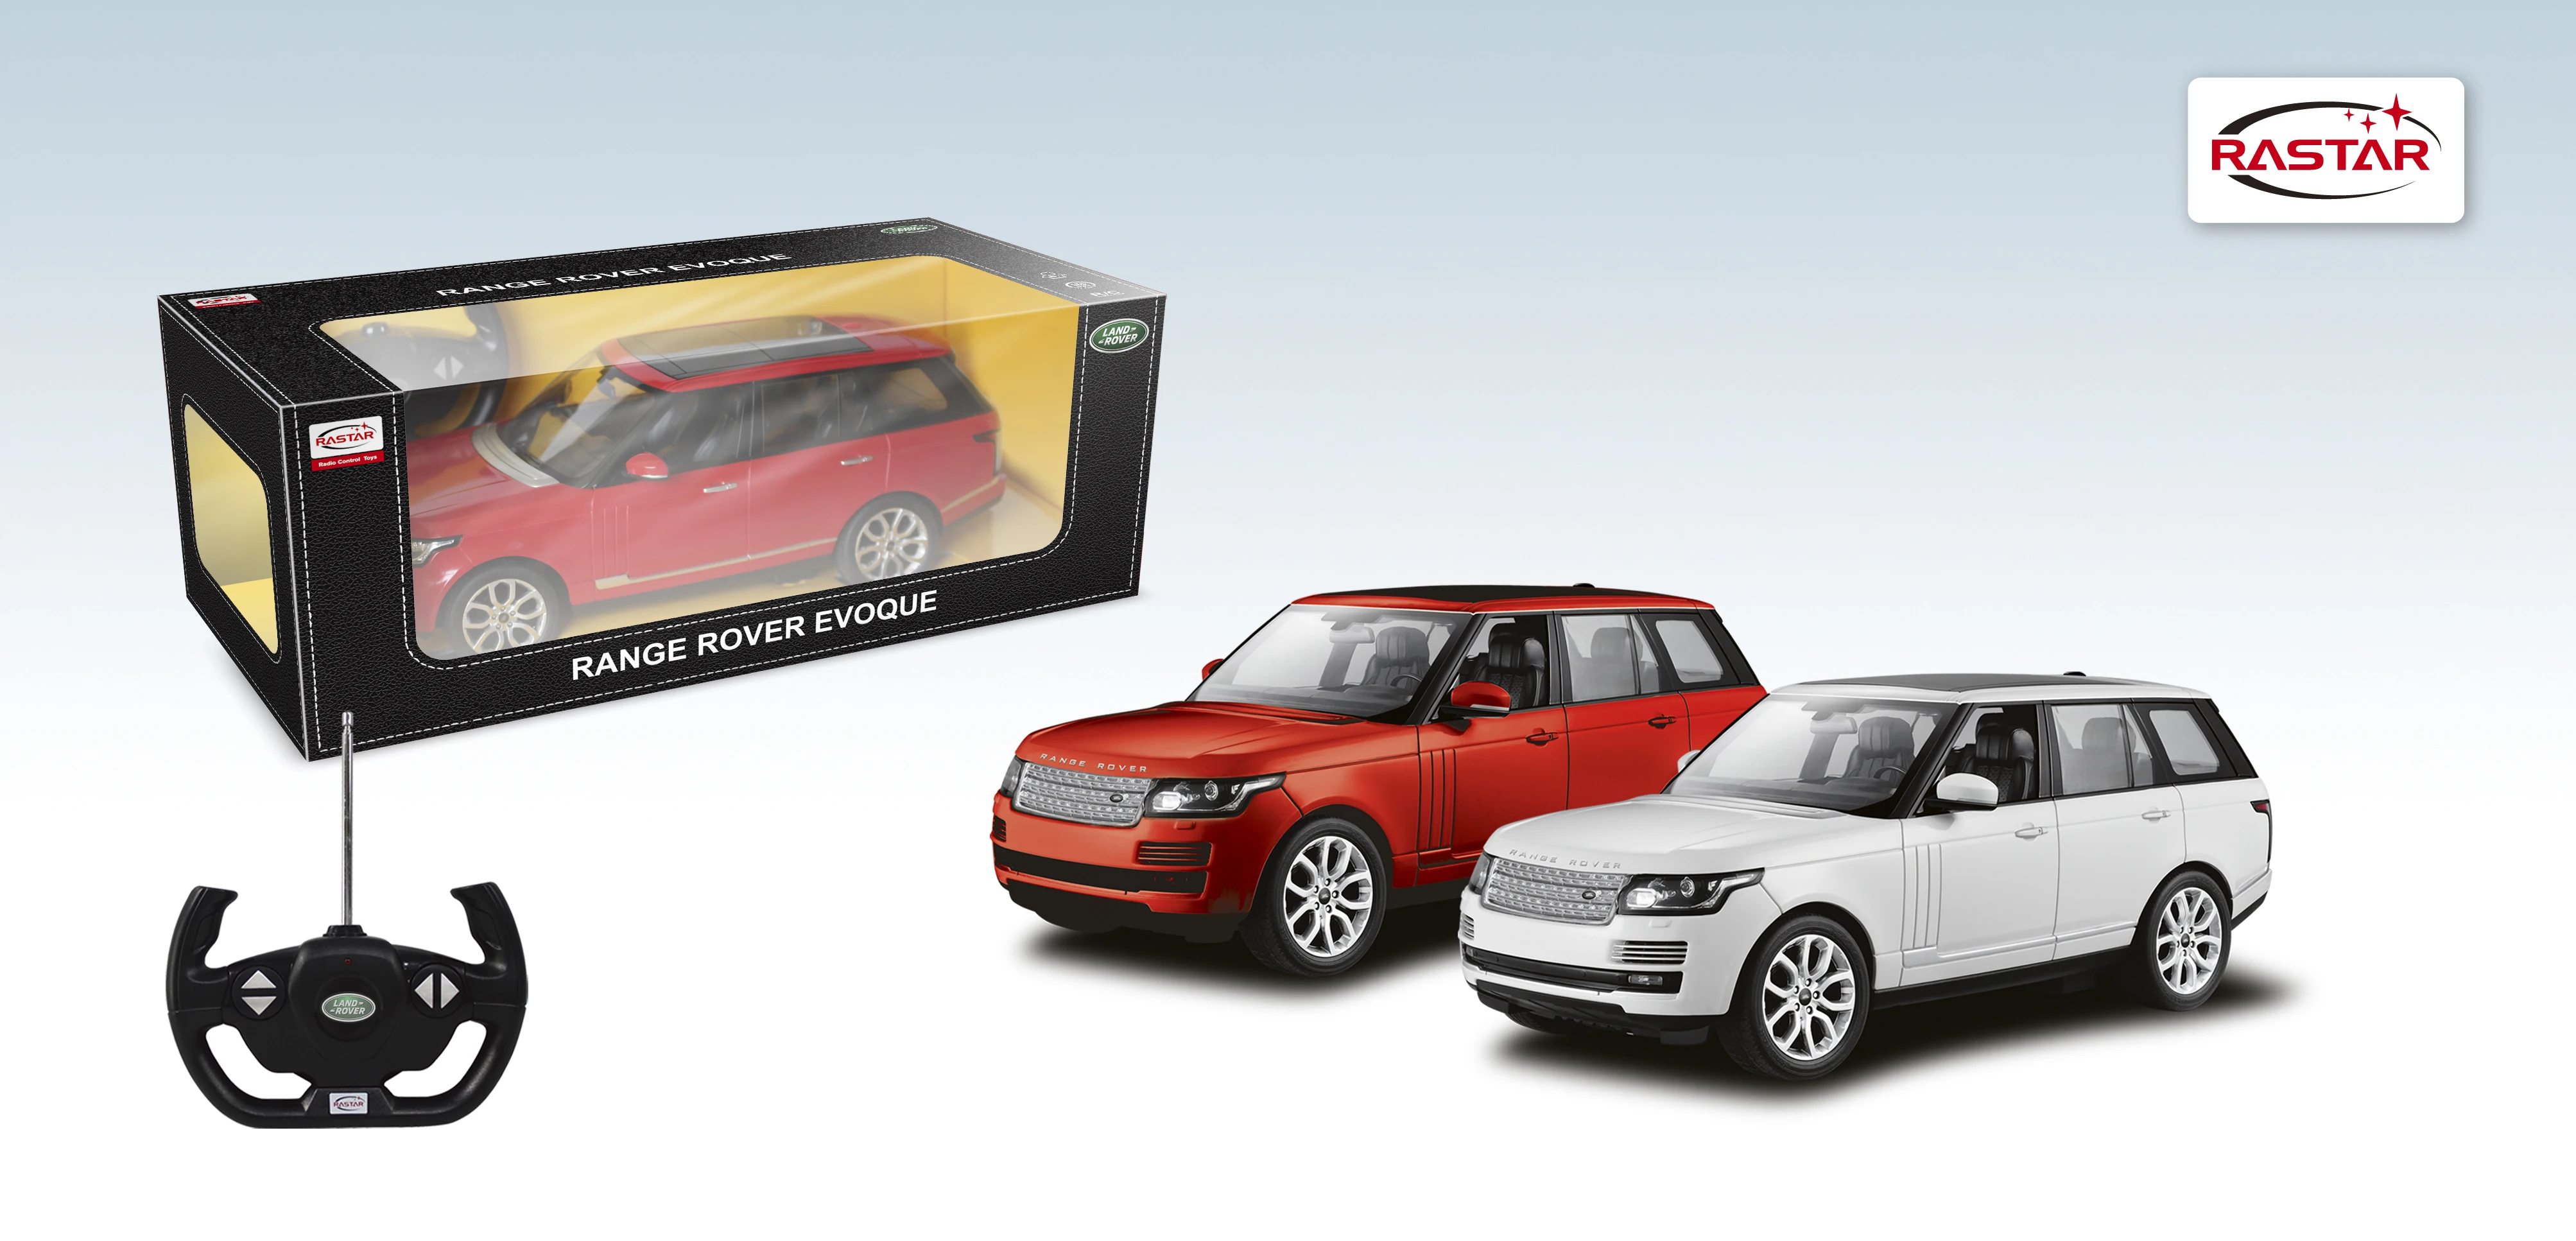 Rastar 49700 échelle 1:14 Land Rover Range Rover Sport R/C voiture en rouge 